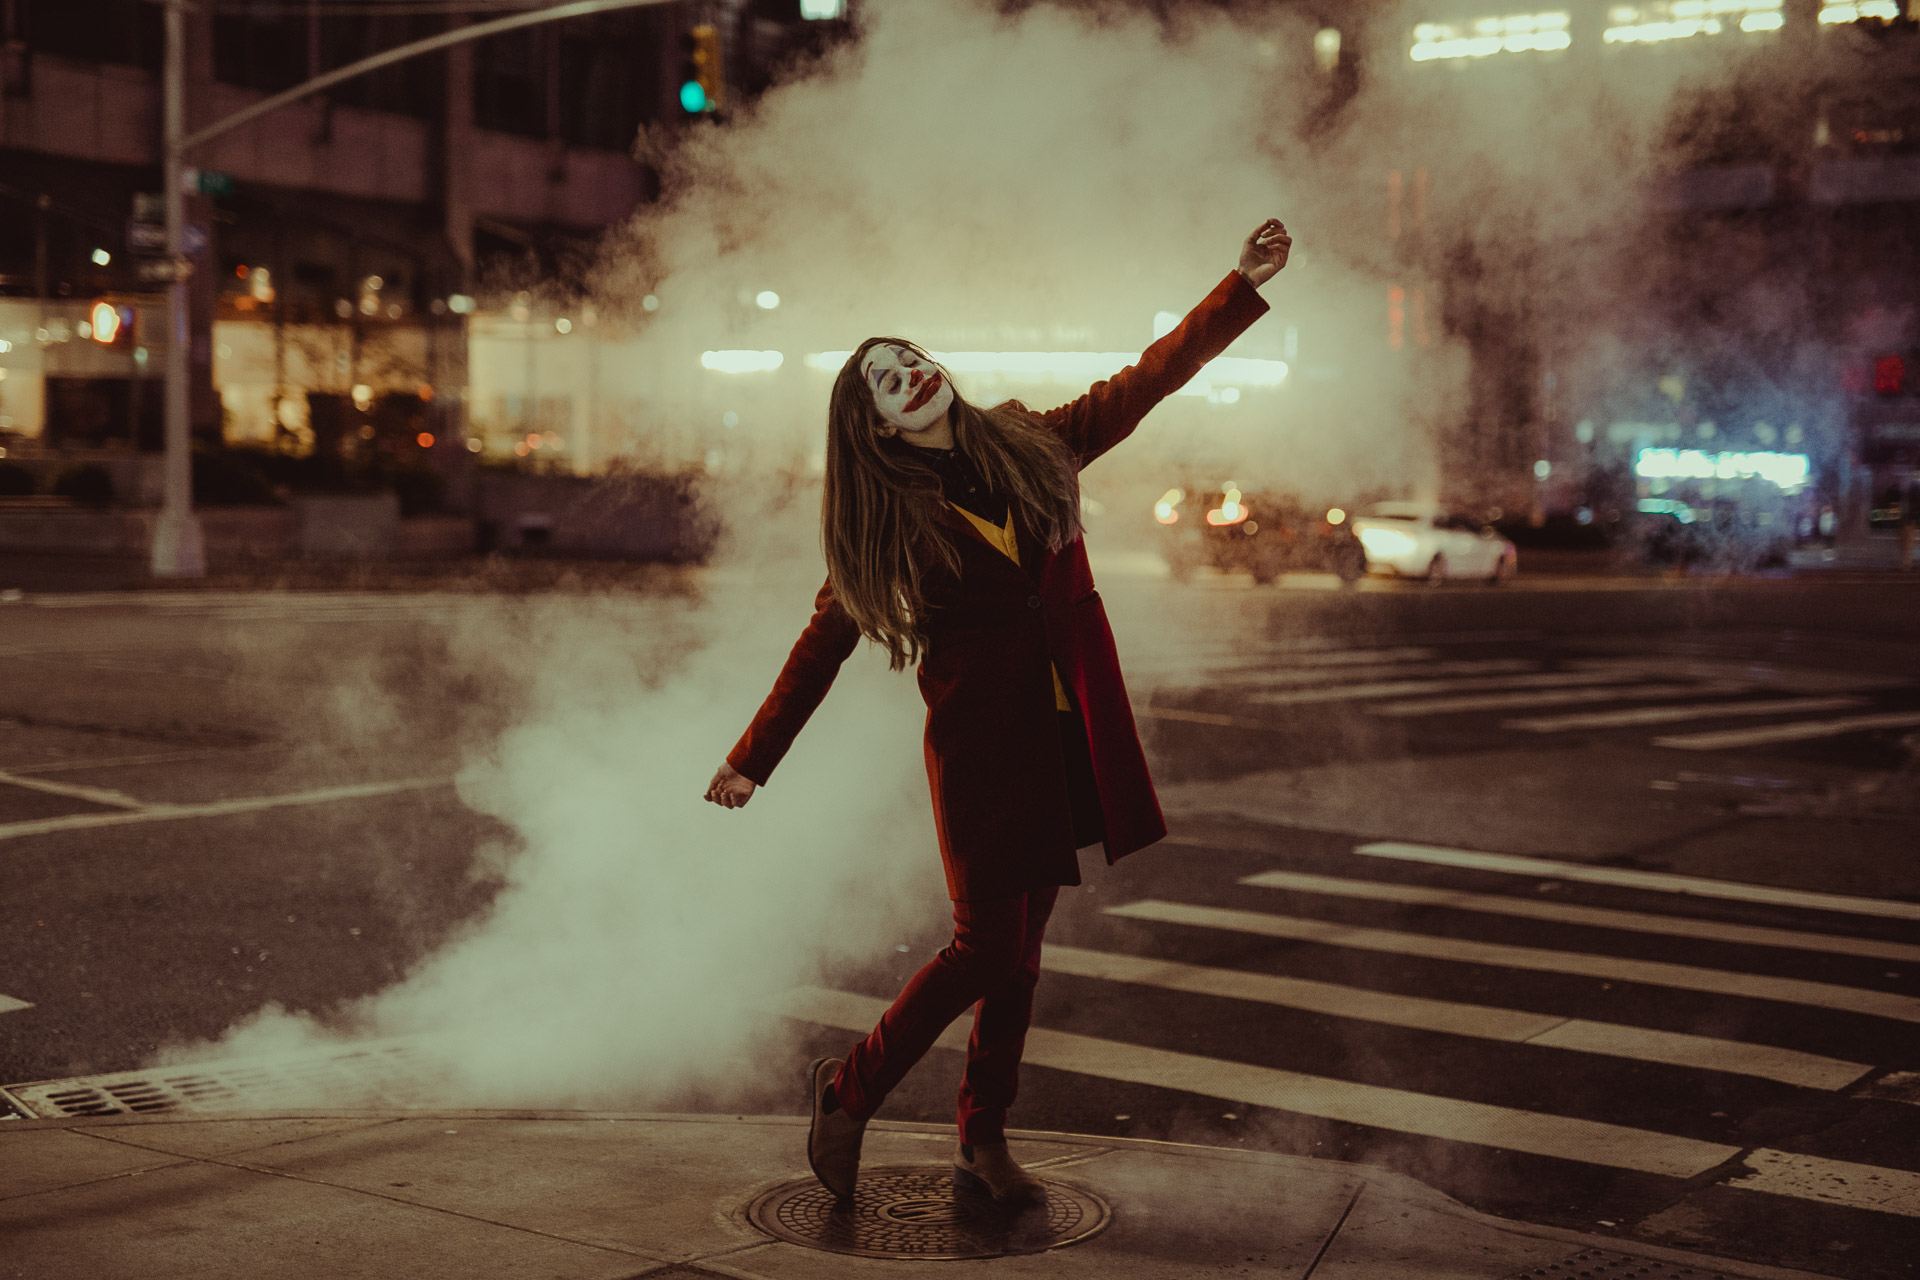 joker photoshoot in new york city